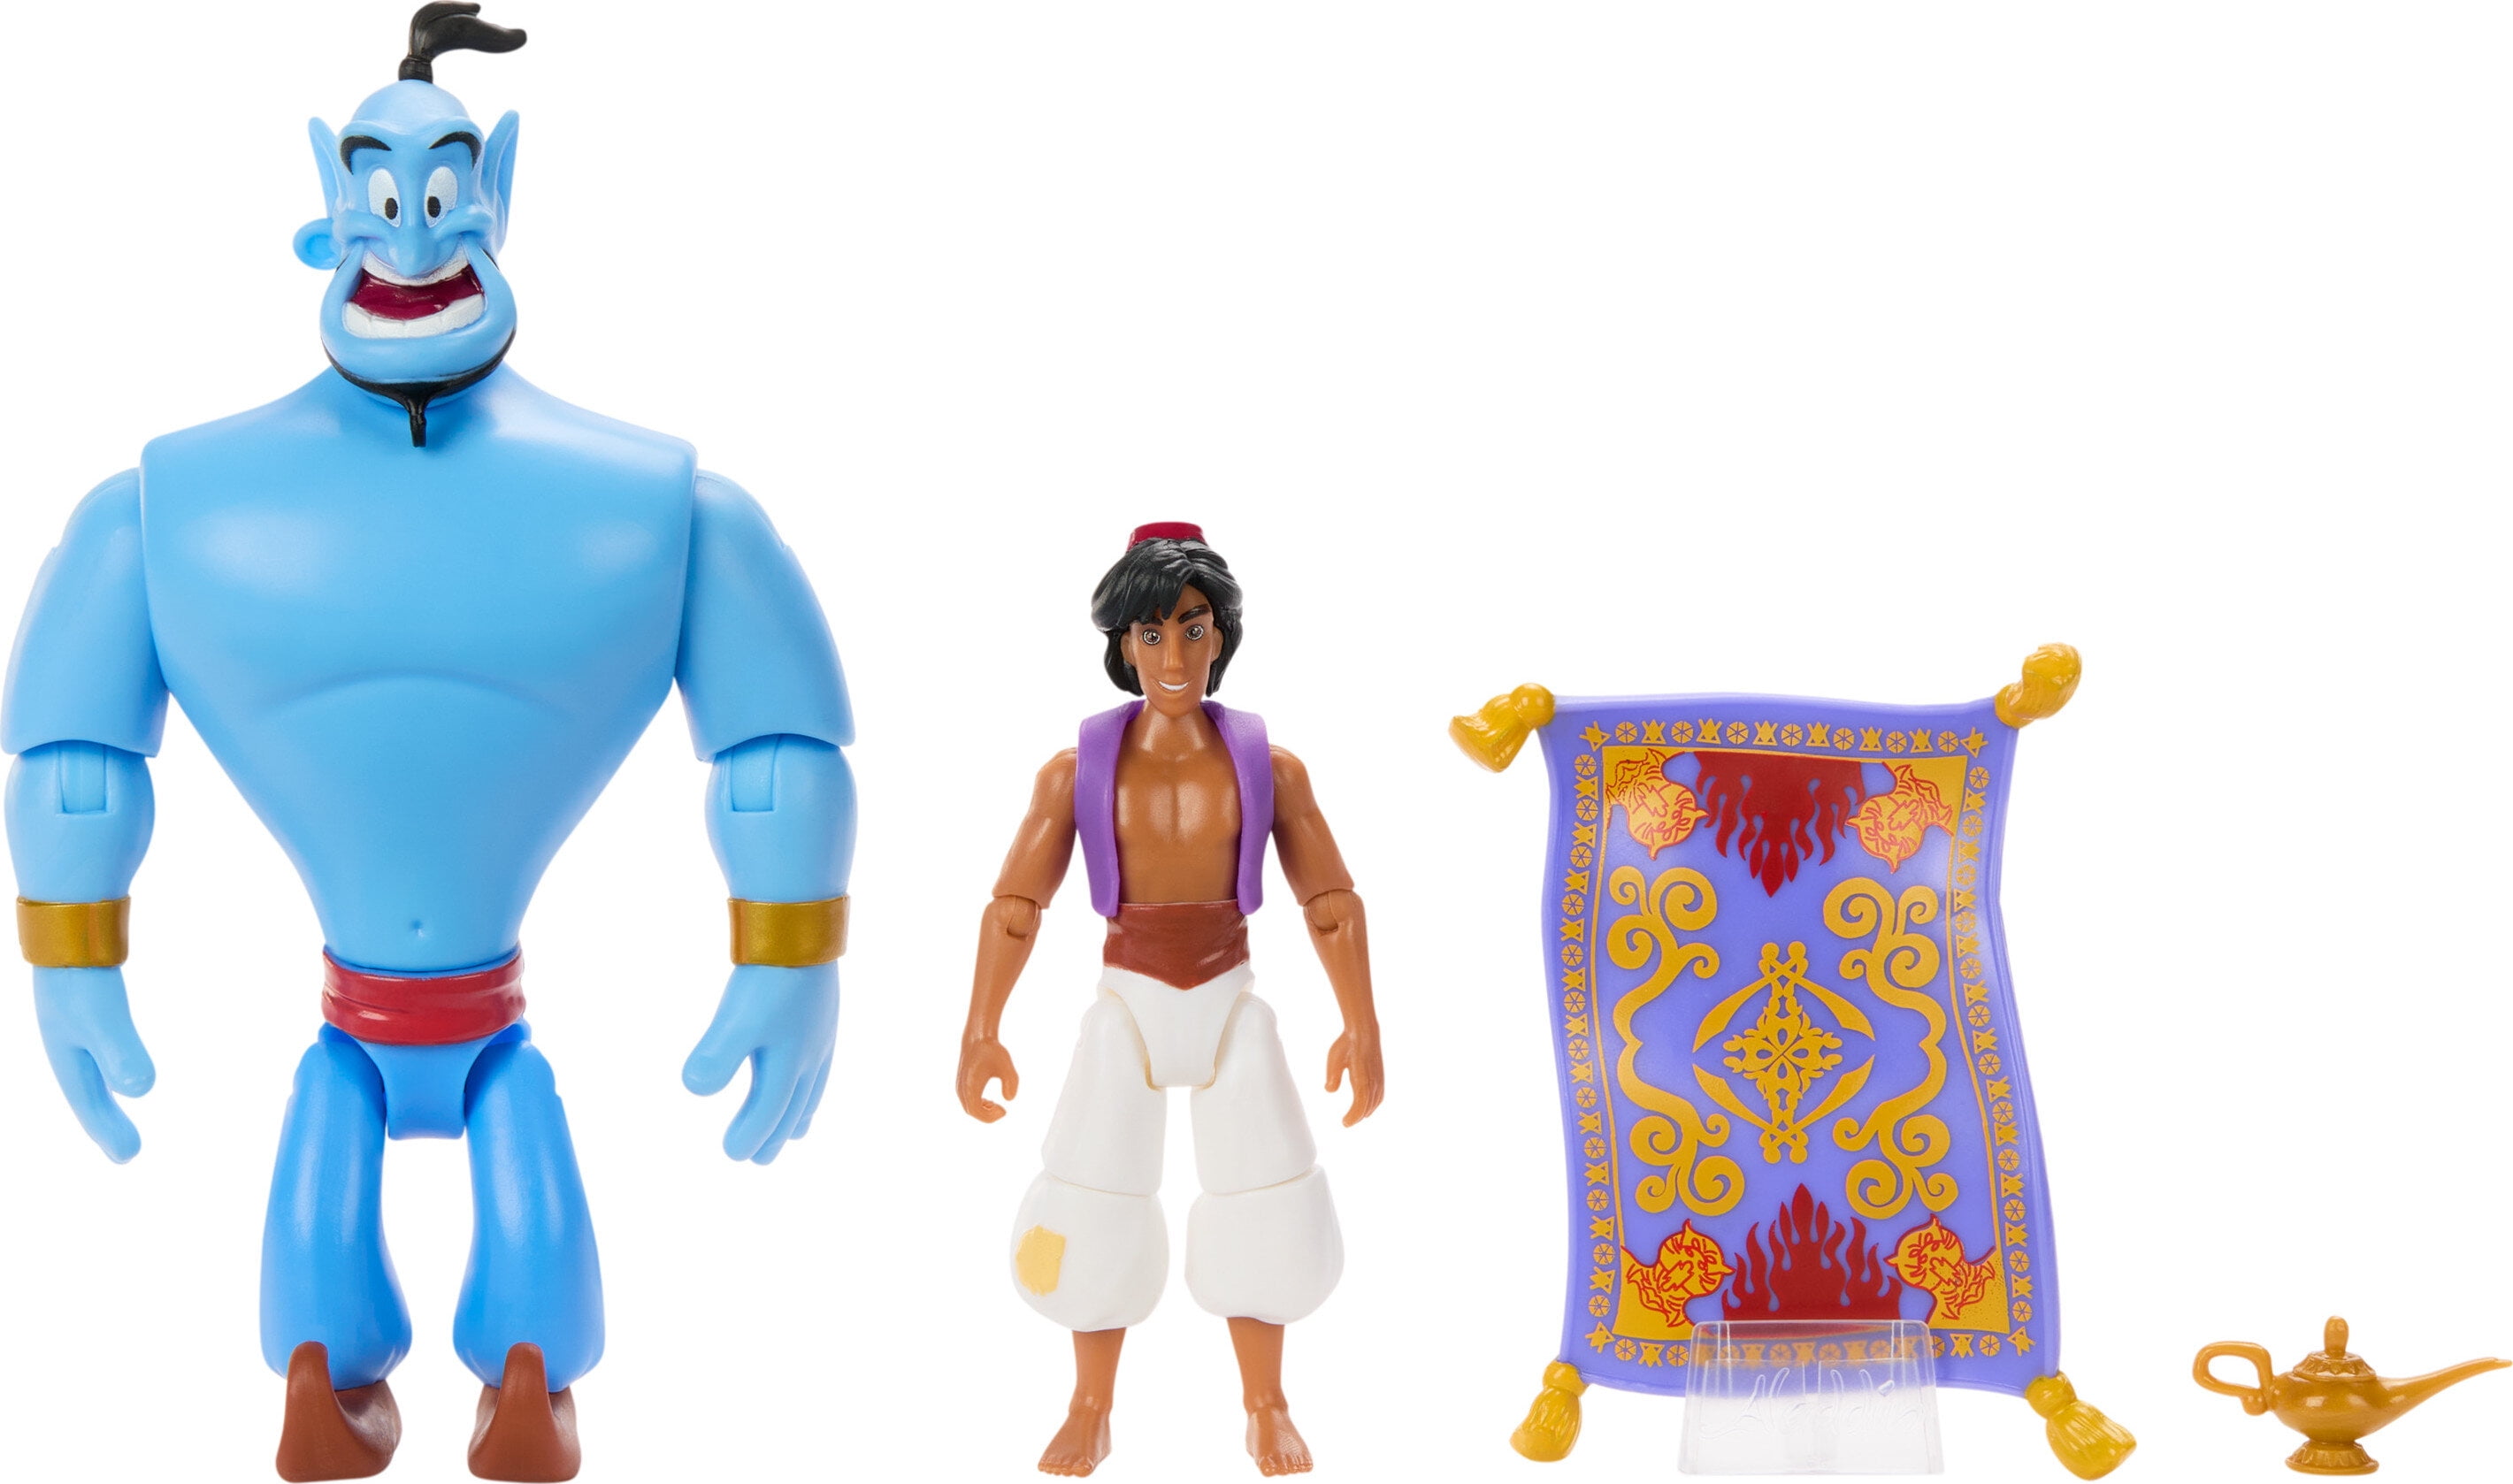 Aladdin and Genie from Aladdin Classic Disney Cardboard Cutout - Set of 2